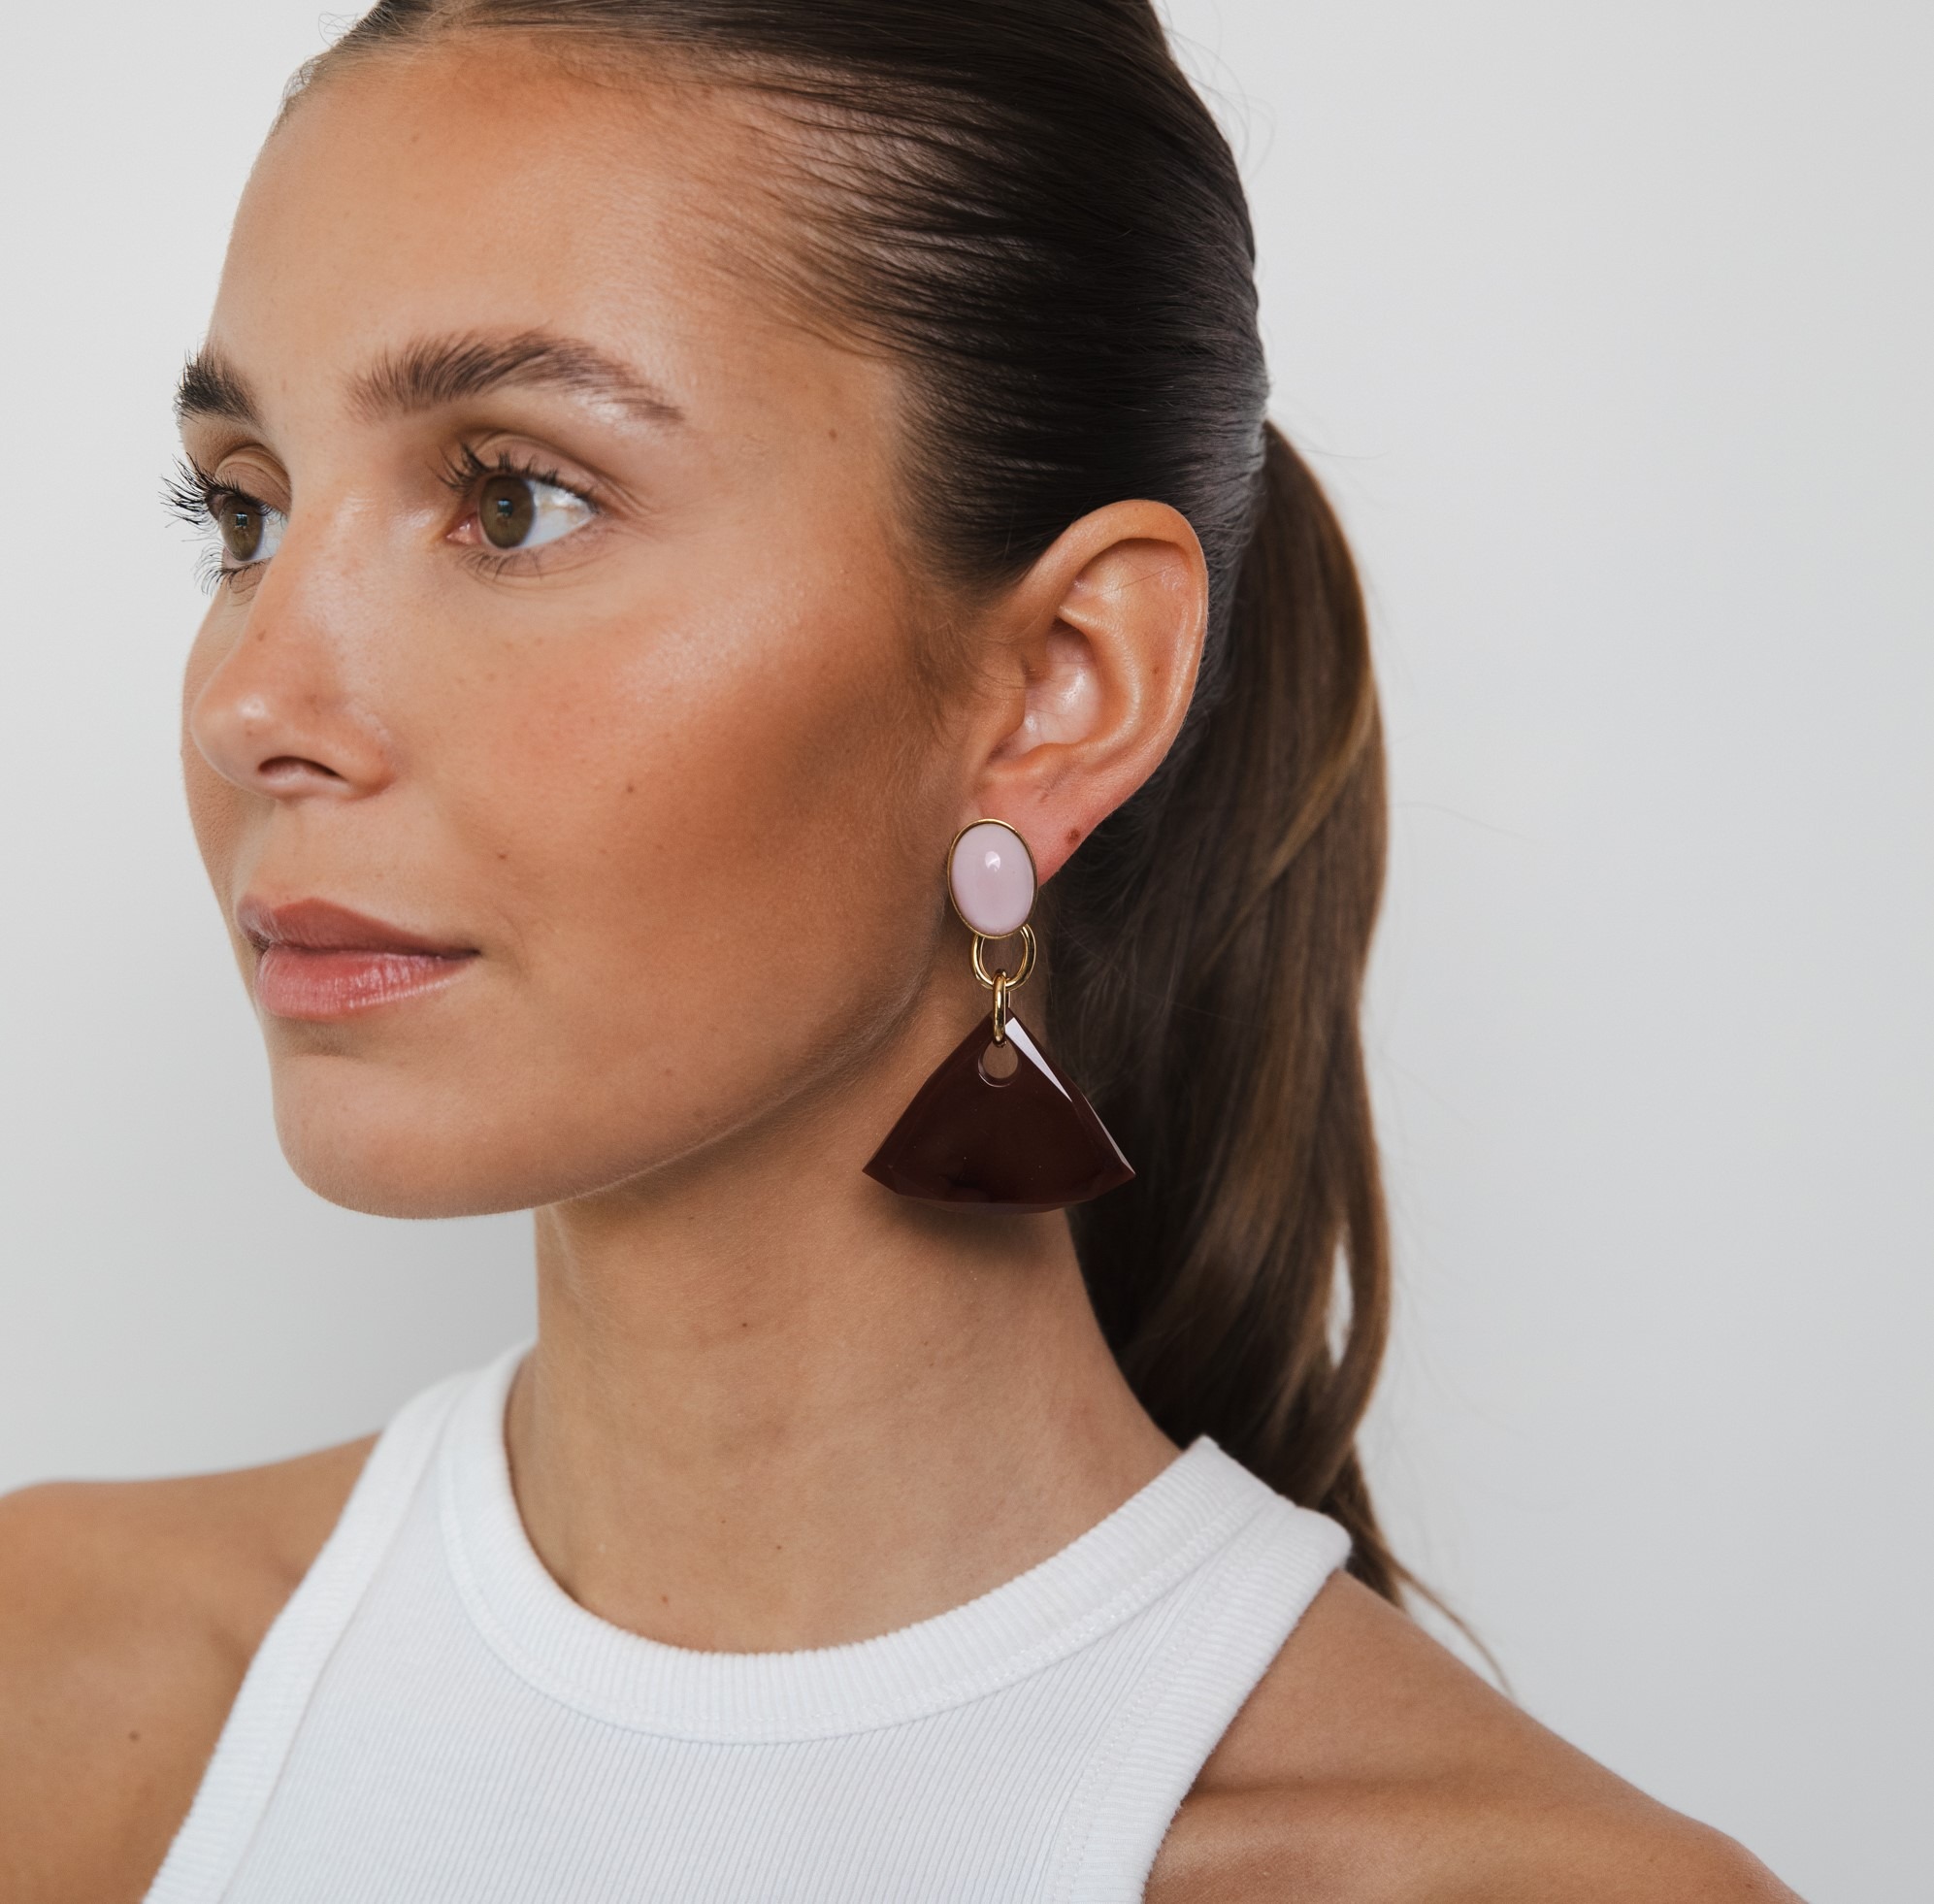 Gianna bordeaux short earrings